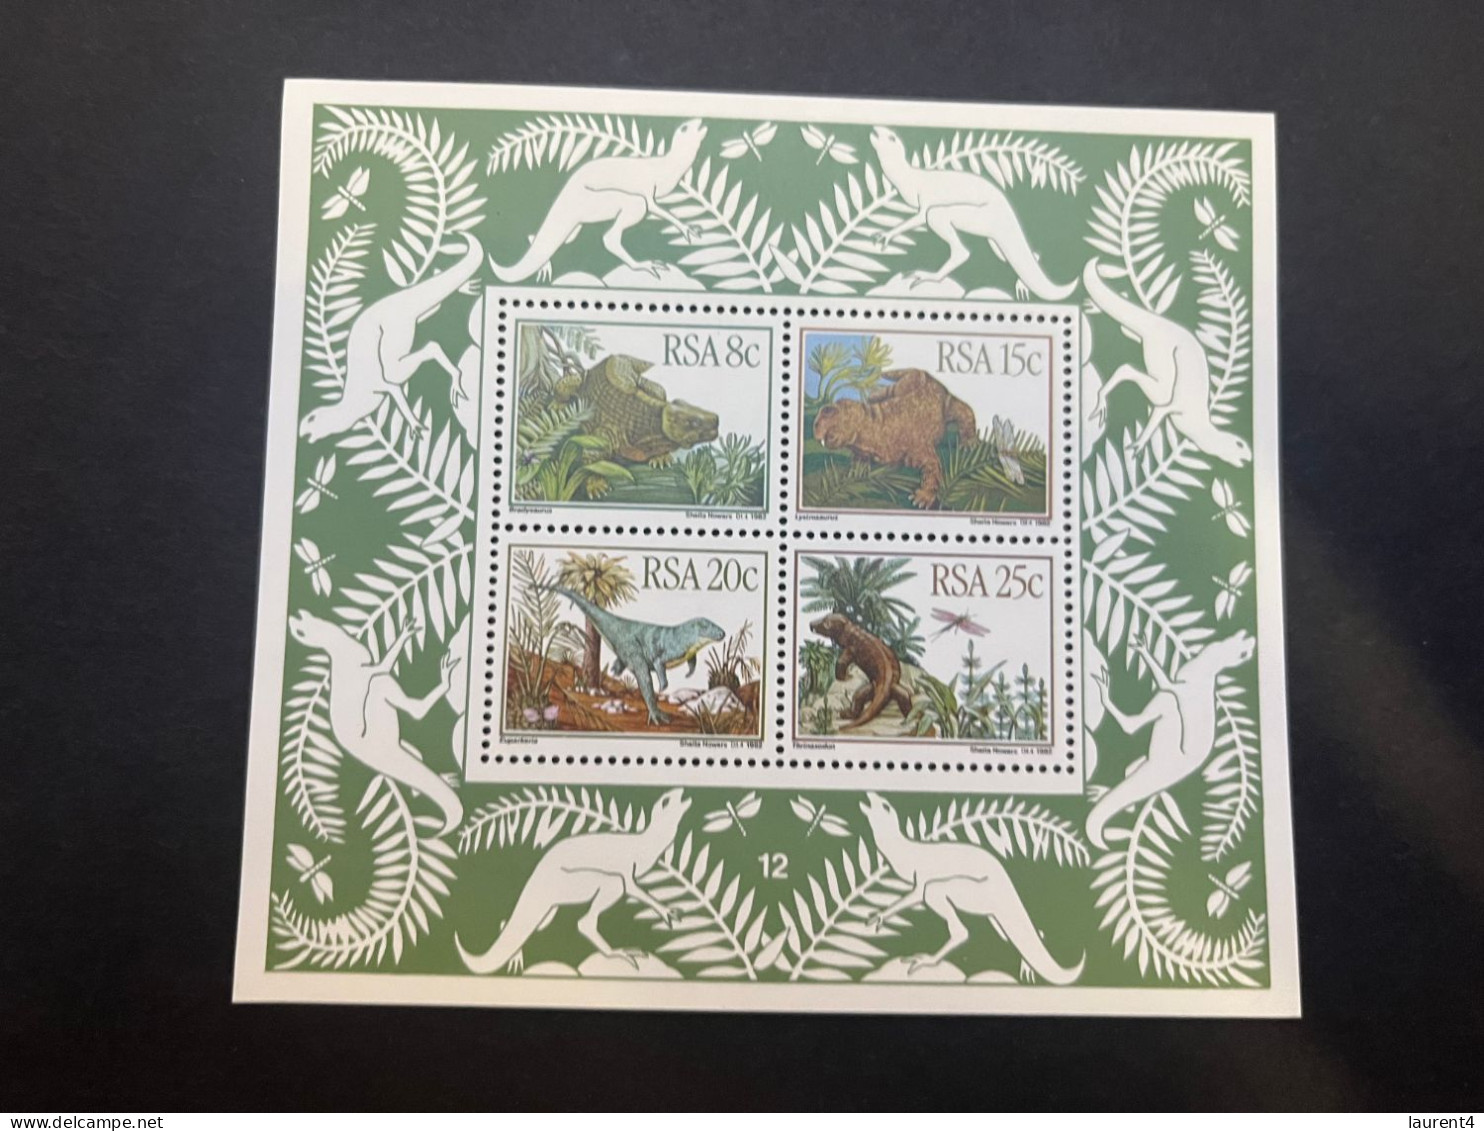 13-5-2024 (stamp) Mint (neuve) Mini-sheet - RSA South Africa - Dinosaurs - Prehistóricos